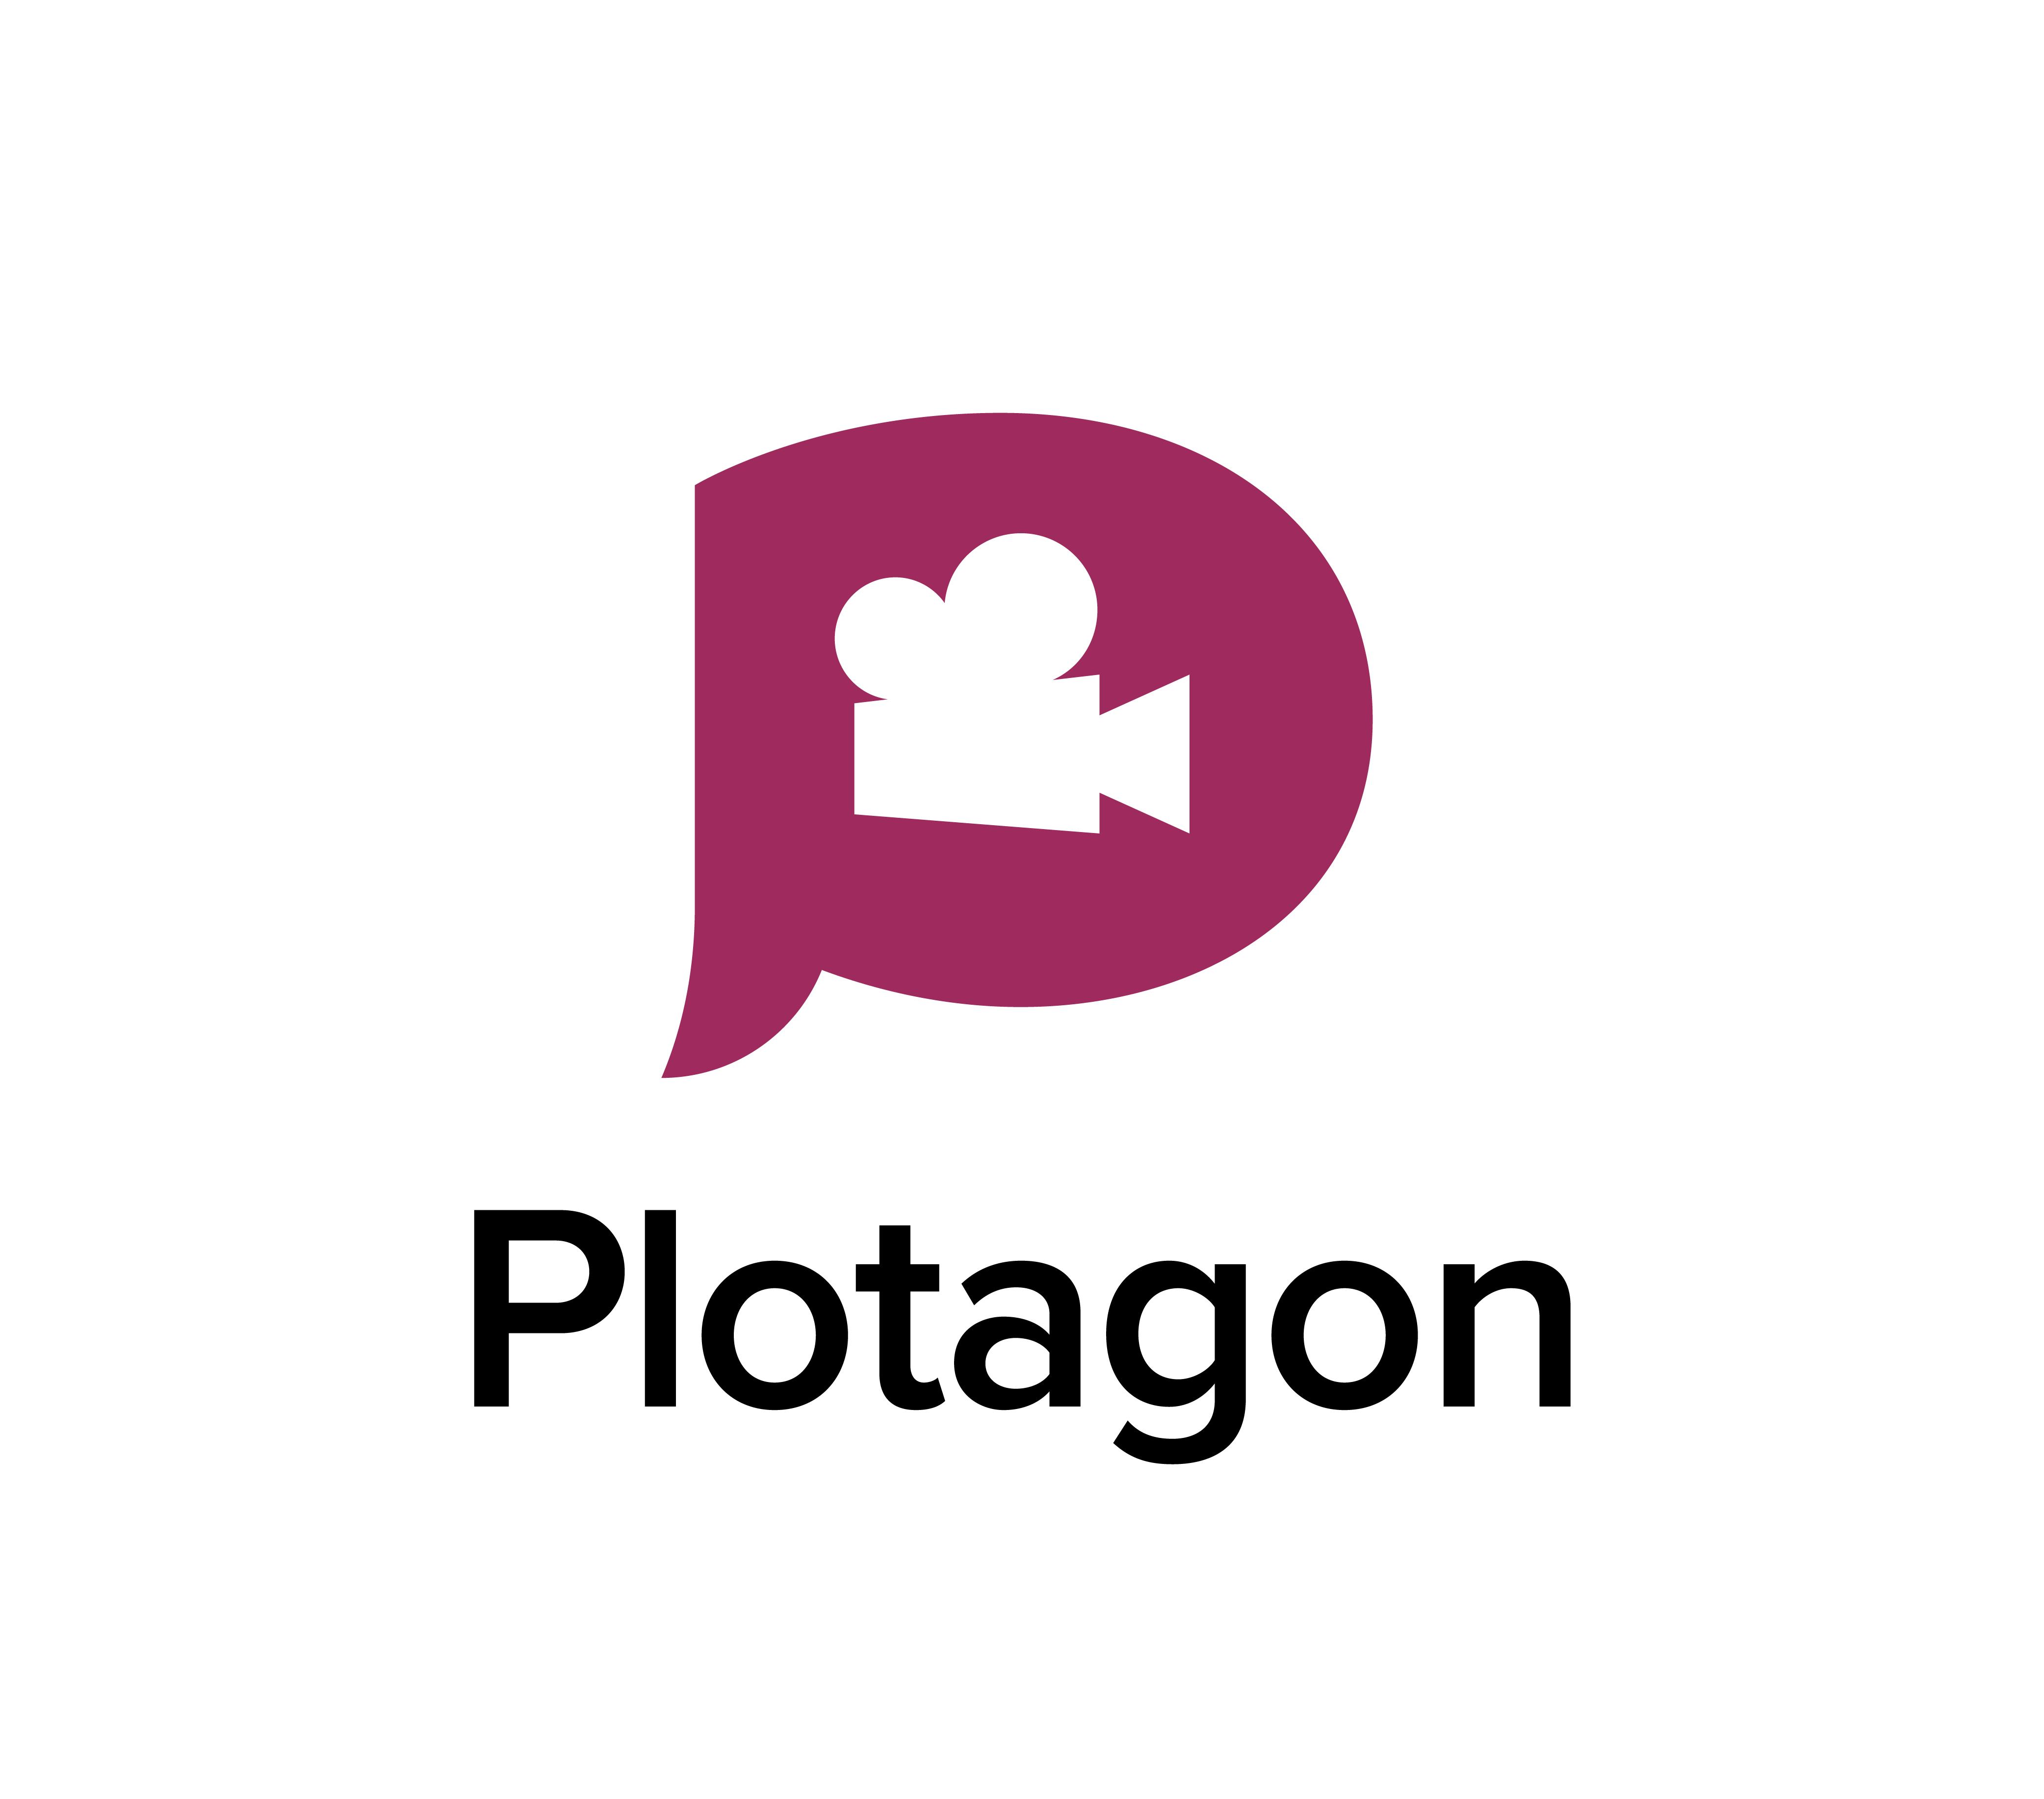 Plotagon Logo